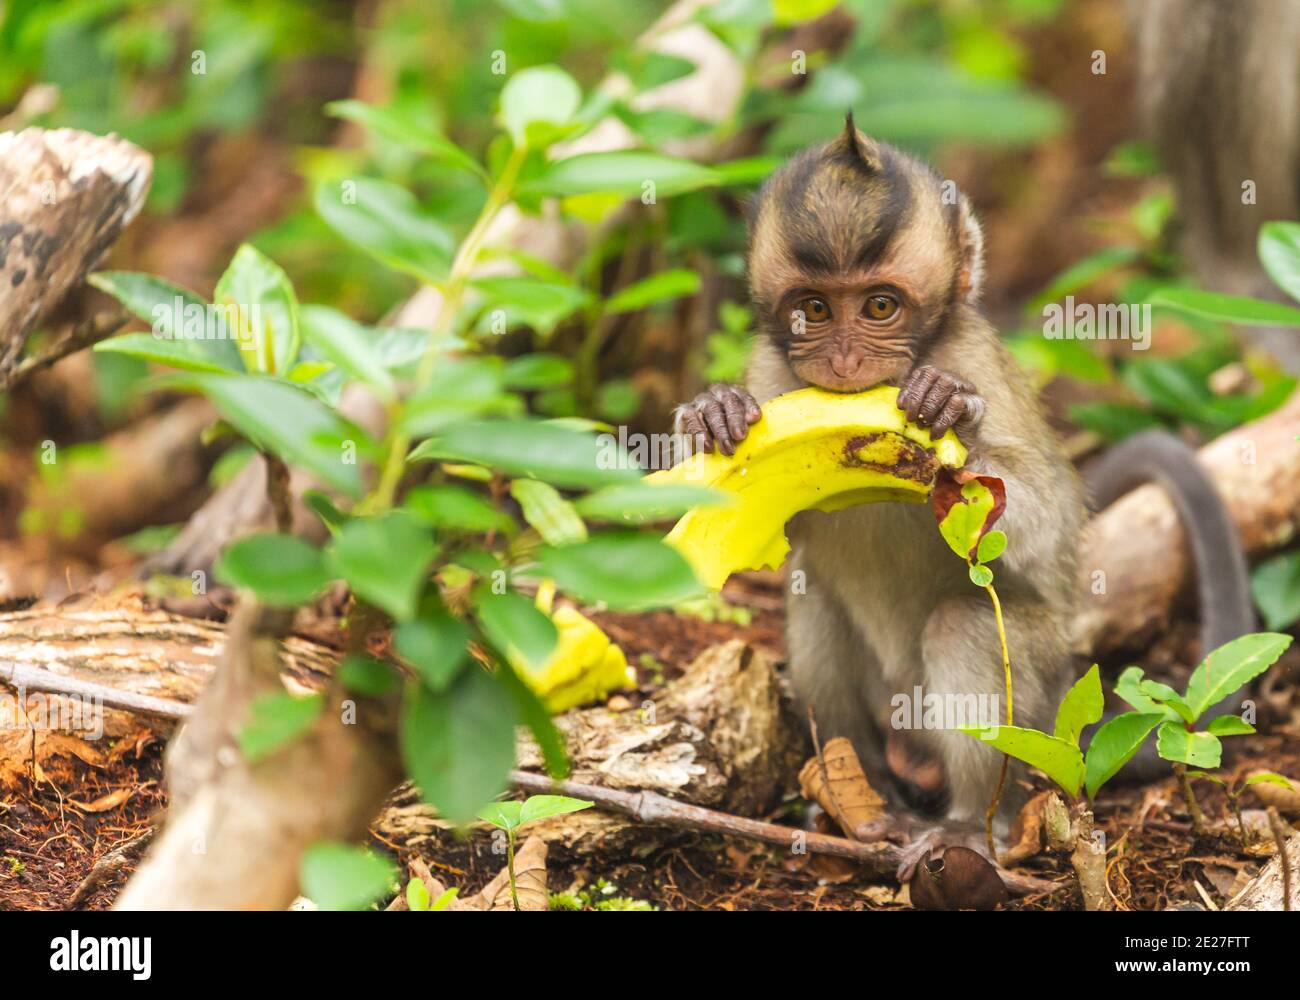 Baby monkey feeding on leaves Stock Photo